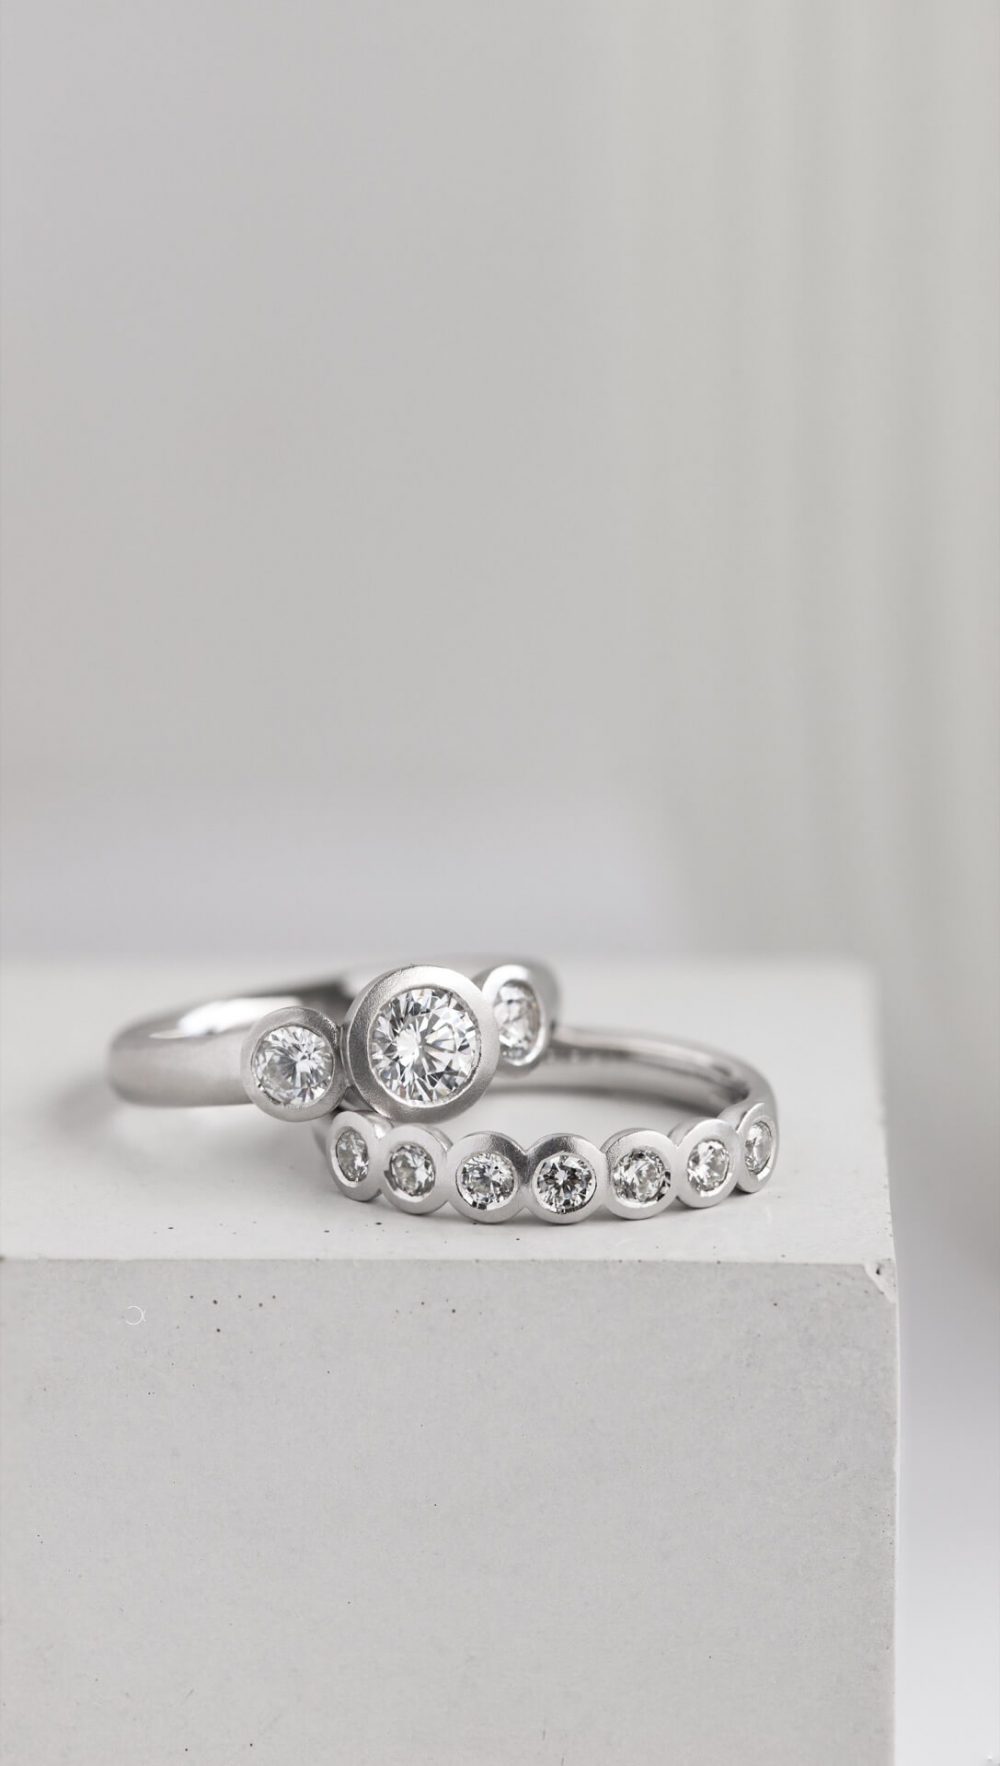 Alternative Diamond Eternity Ring By Jewellery Designer Jacks Turner.